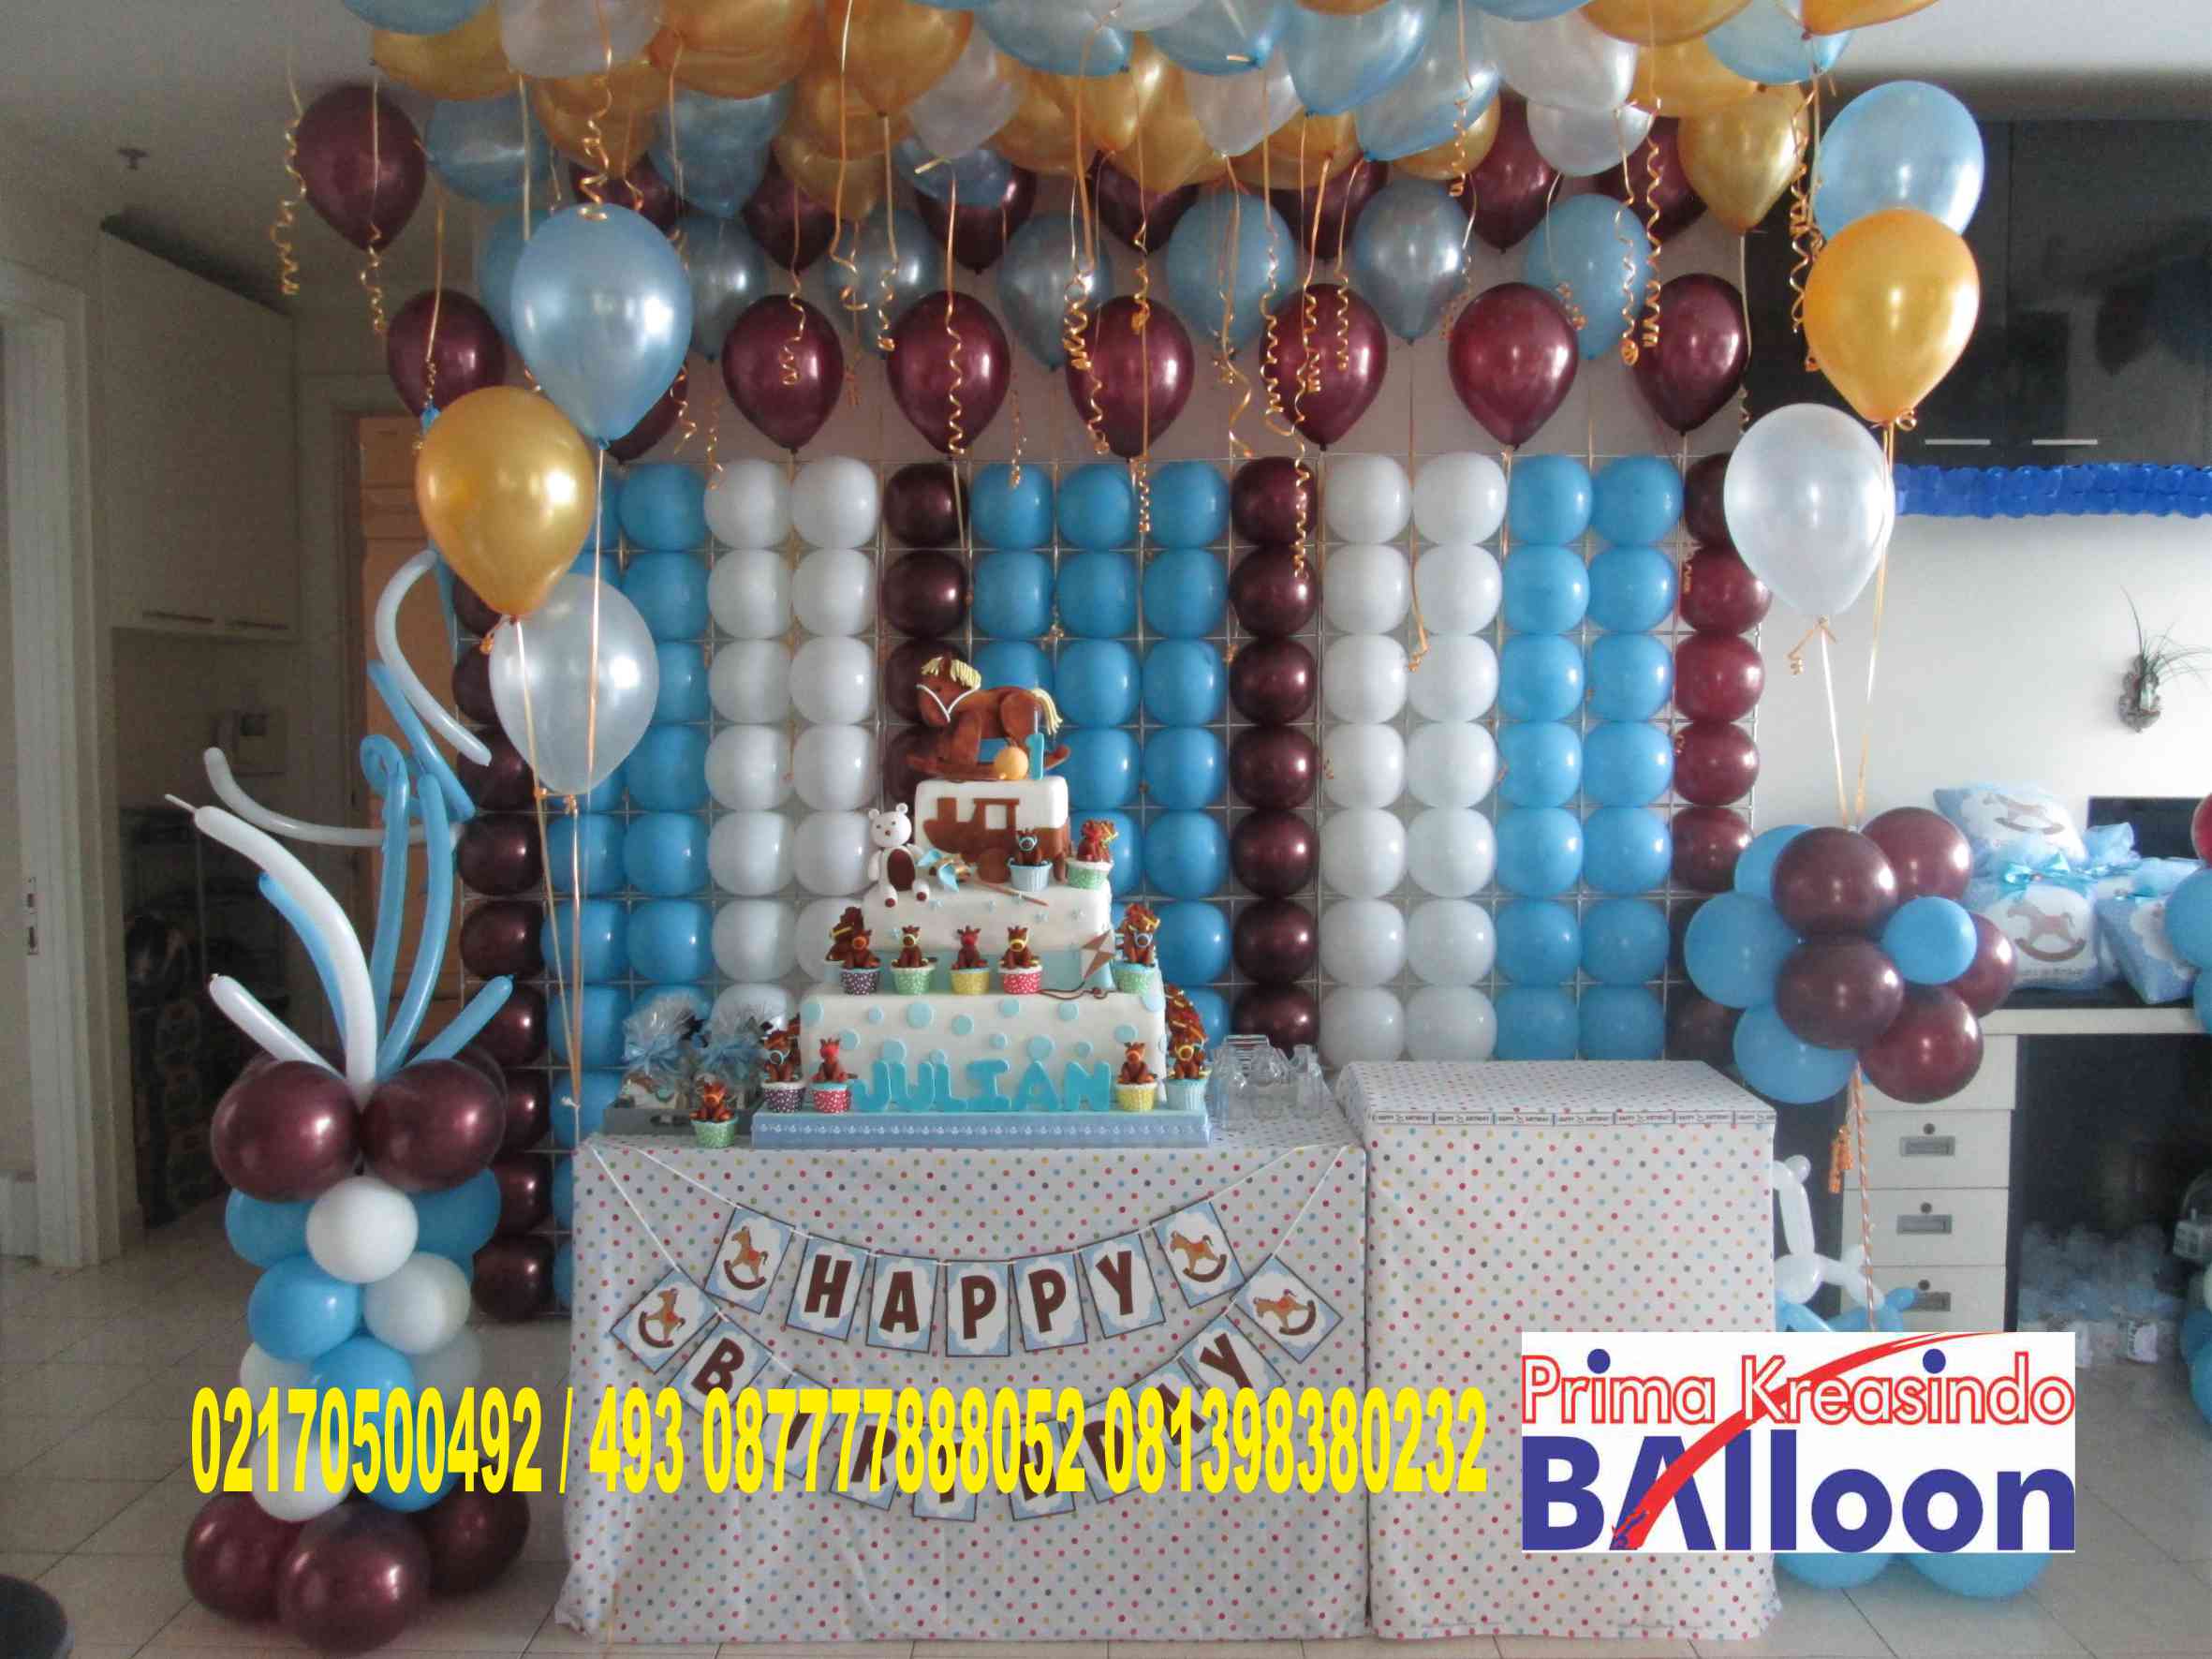  Dekorasi  balon  backdrop ulang tahun di apartemen ambasador 